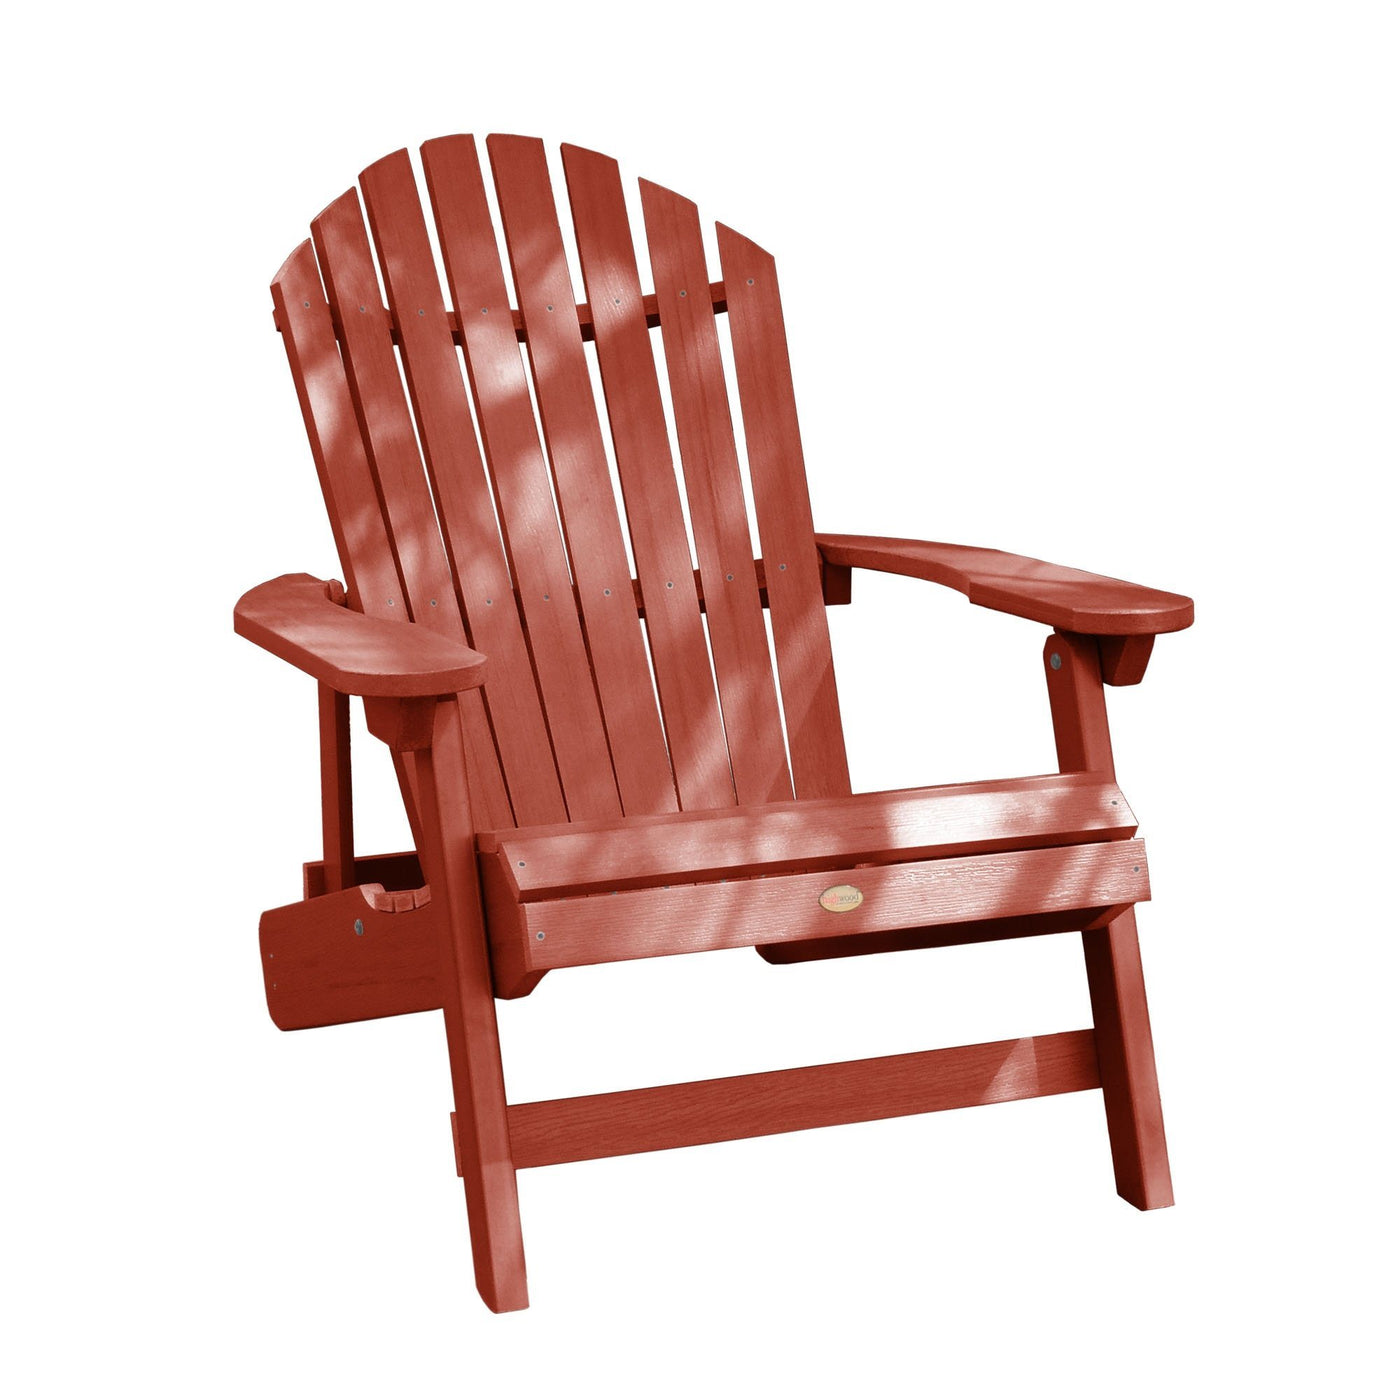 King Hamilton Folding & Reclining Adirondack Chair Highwood USA Rustic Red 